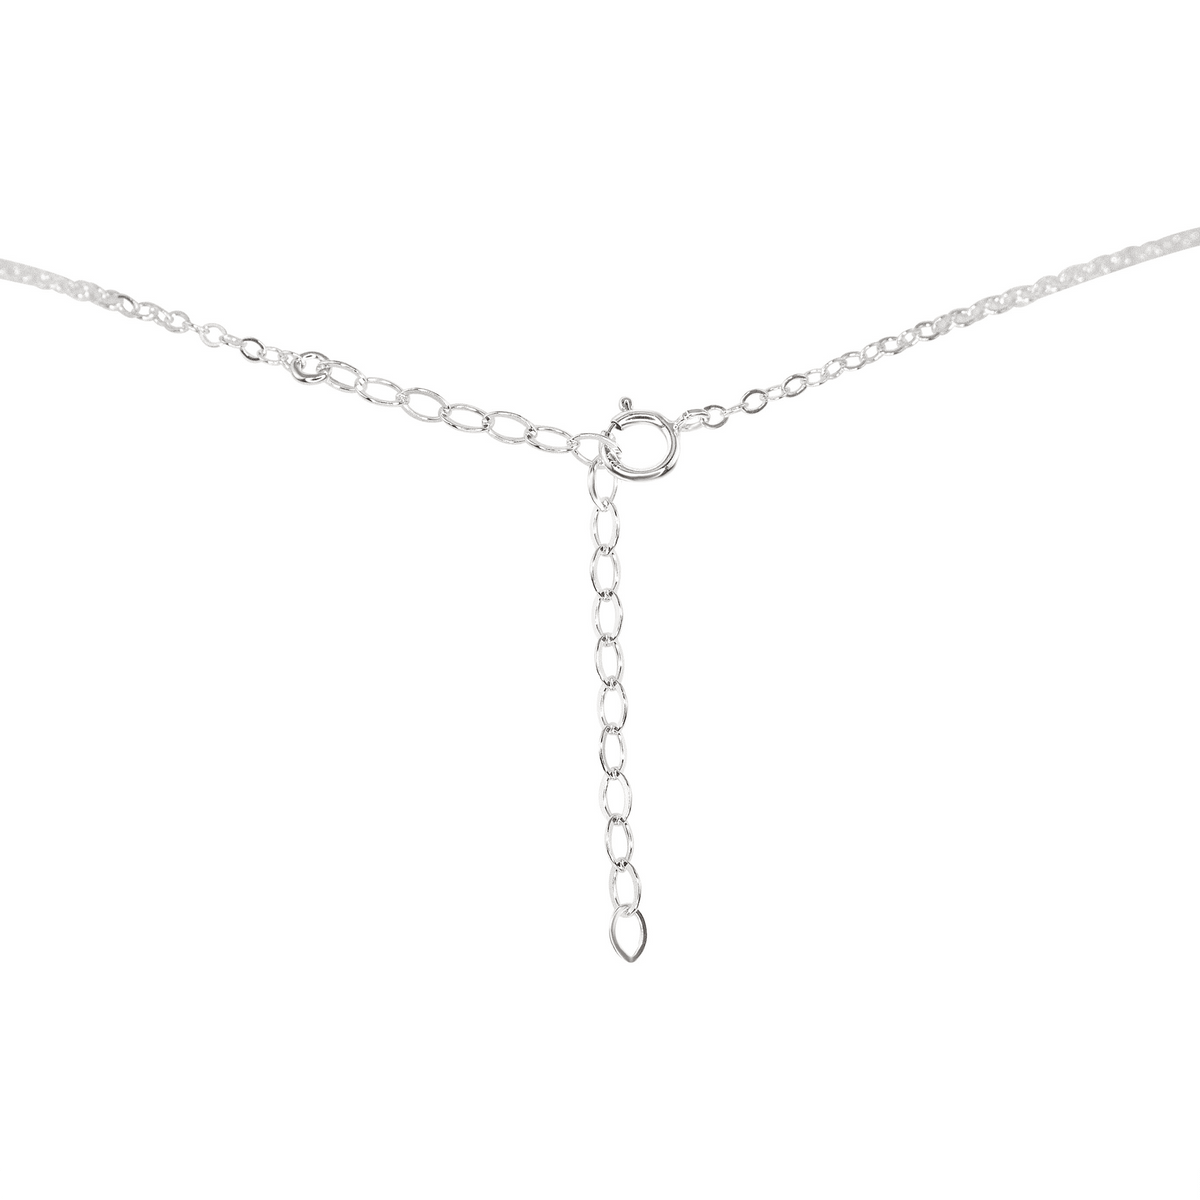 Dainty Iolite Lariat Necklace - Dainty Iolite Lariat Necklace - 14k Gold Fill - Luna Tide Handmade Crystal Jewellery